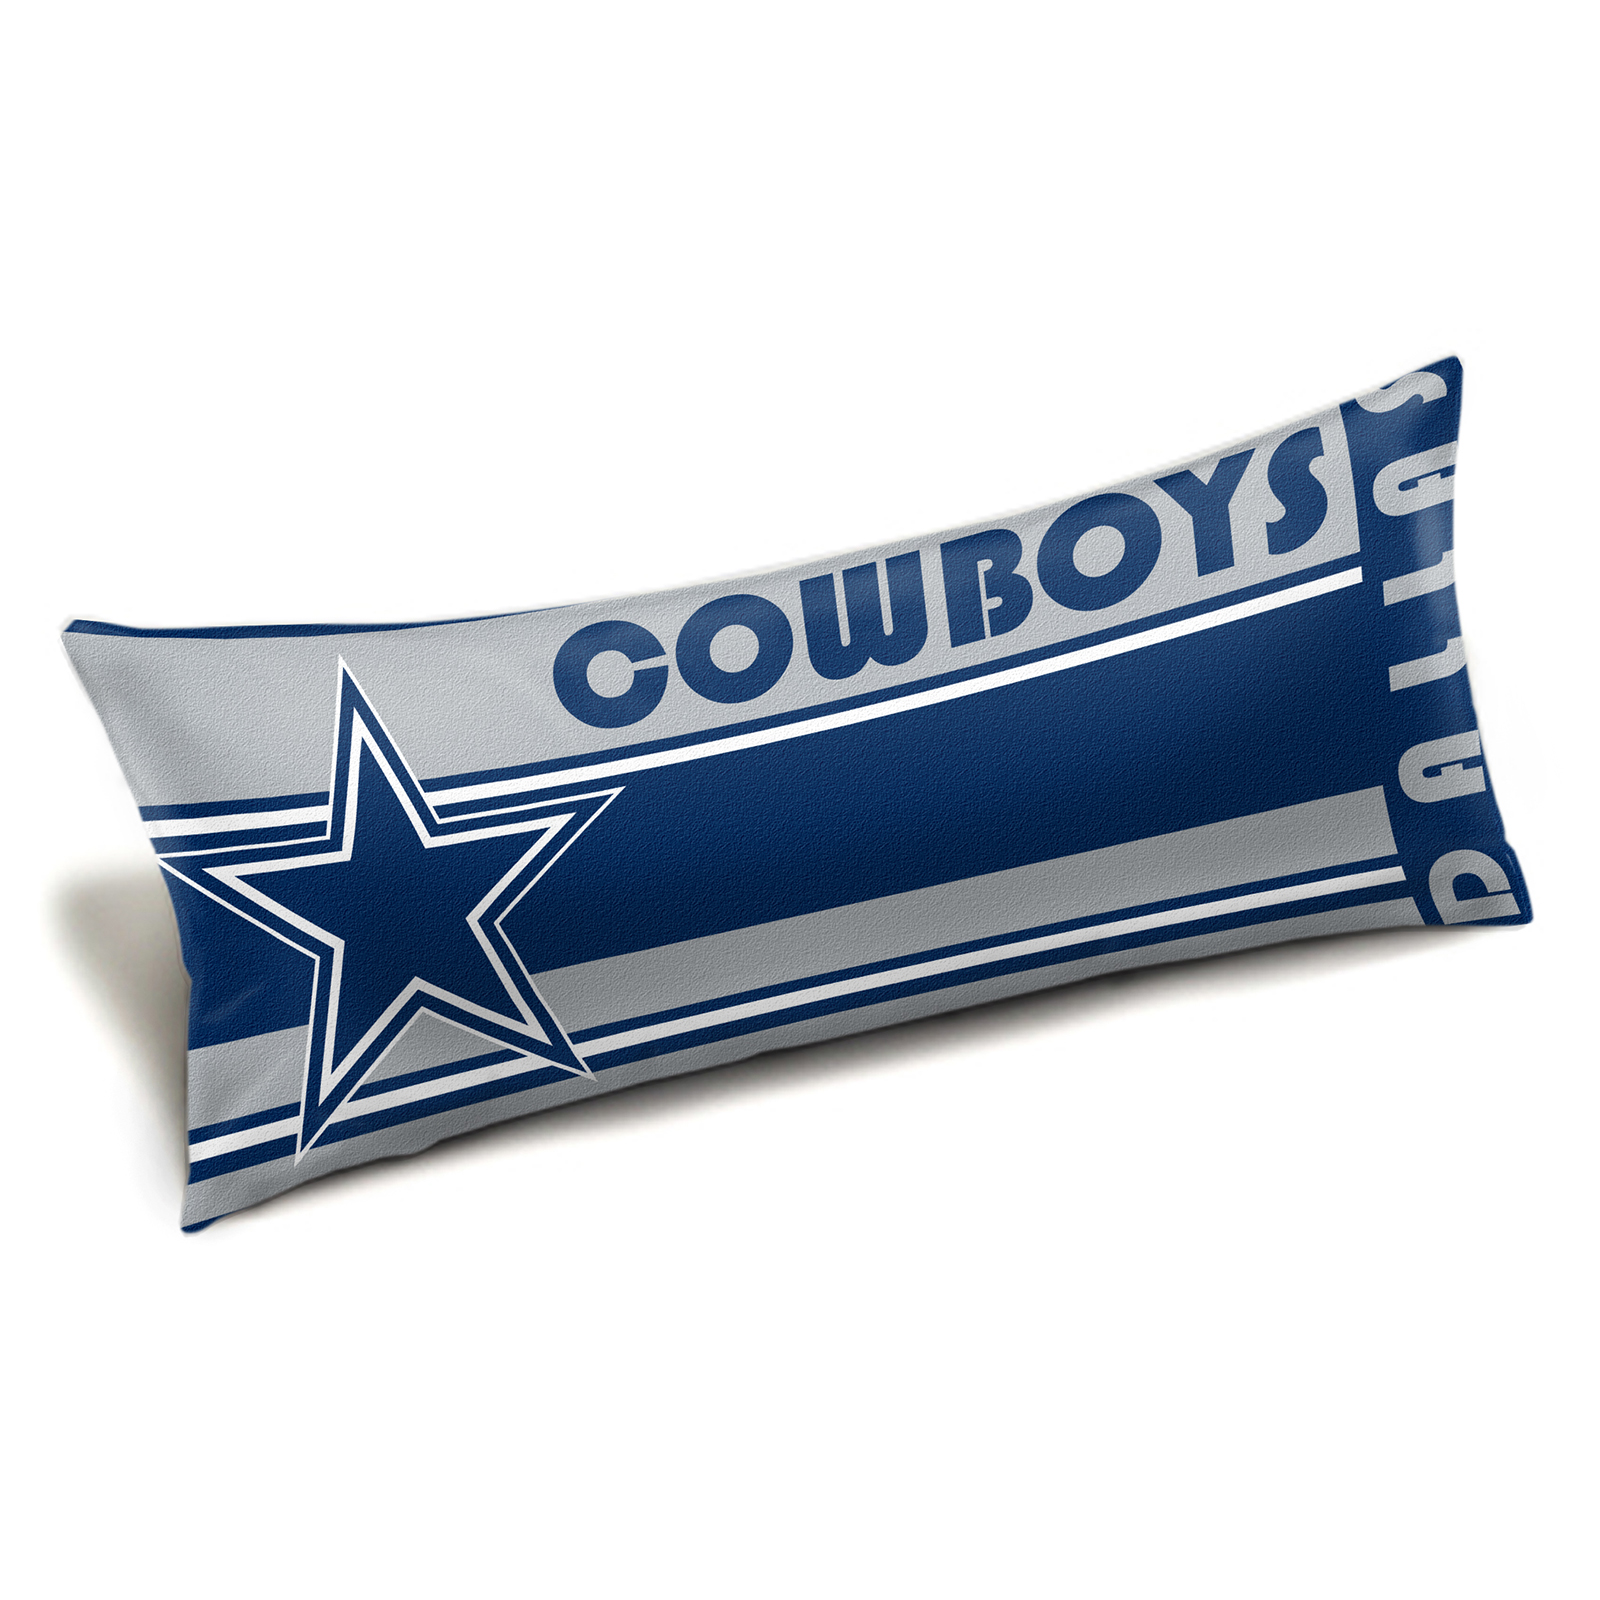 NFL Dallas Cowboys Body Pillow   Fitness & Sports   Fan Shop   Home